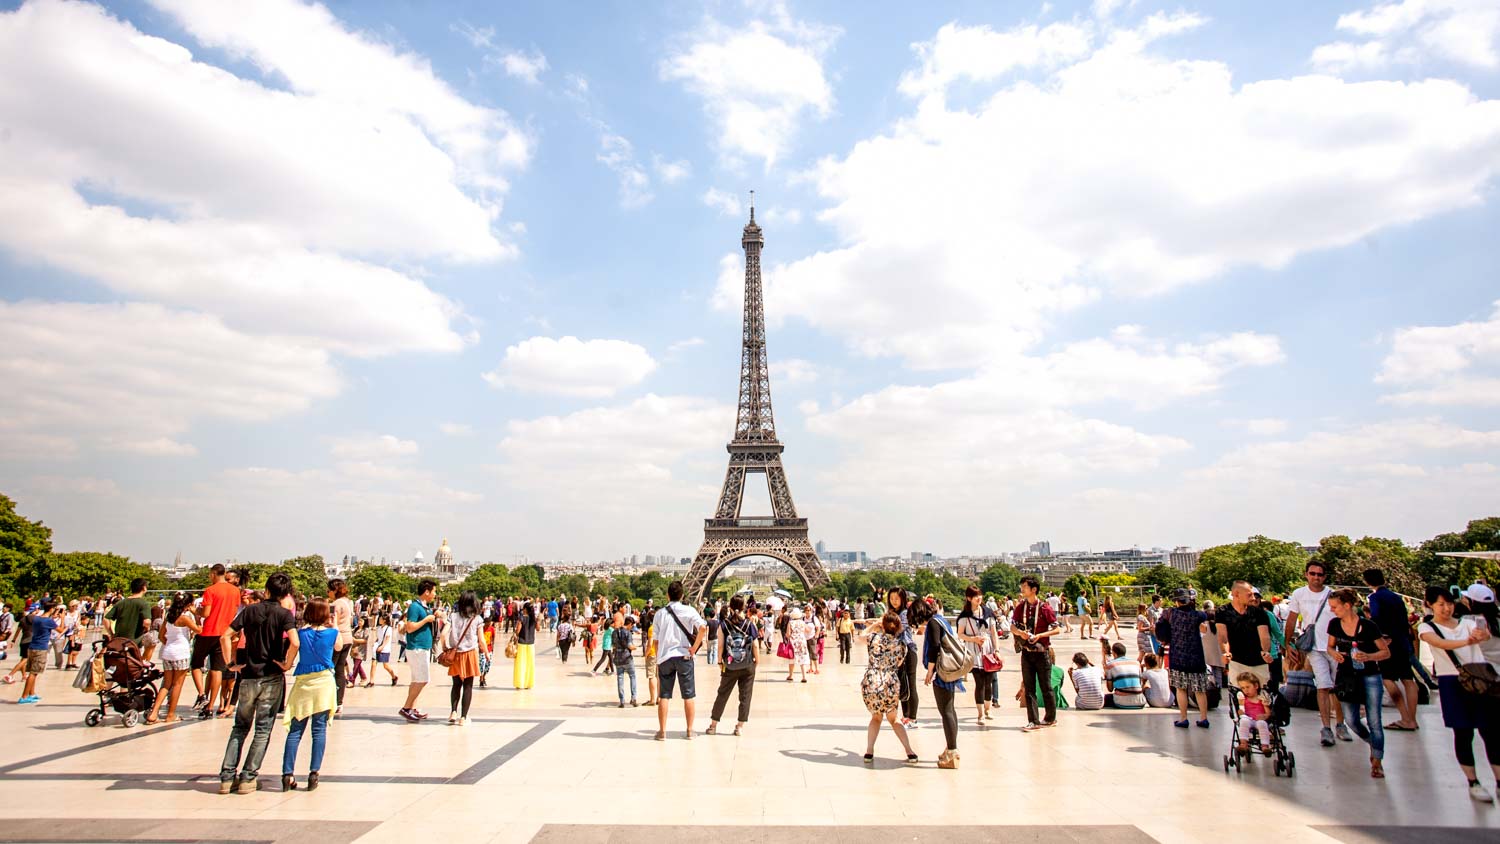 The Eiffel Tower typically receives around 6 million tourists from around the world each year. eu-journalist diagram